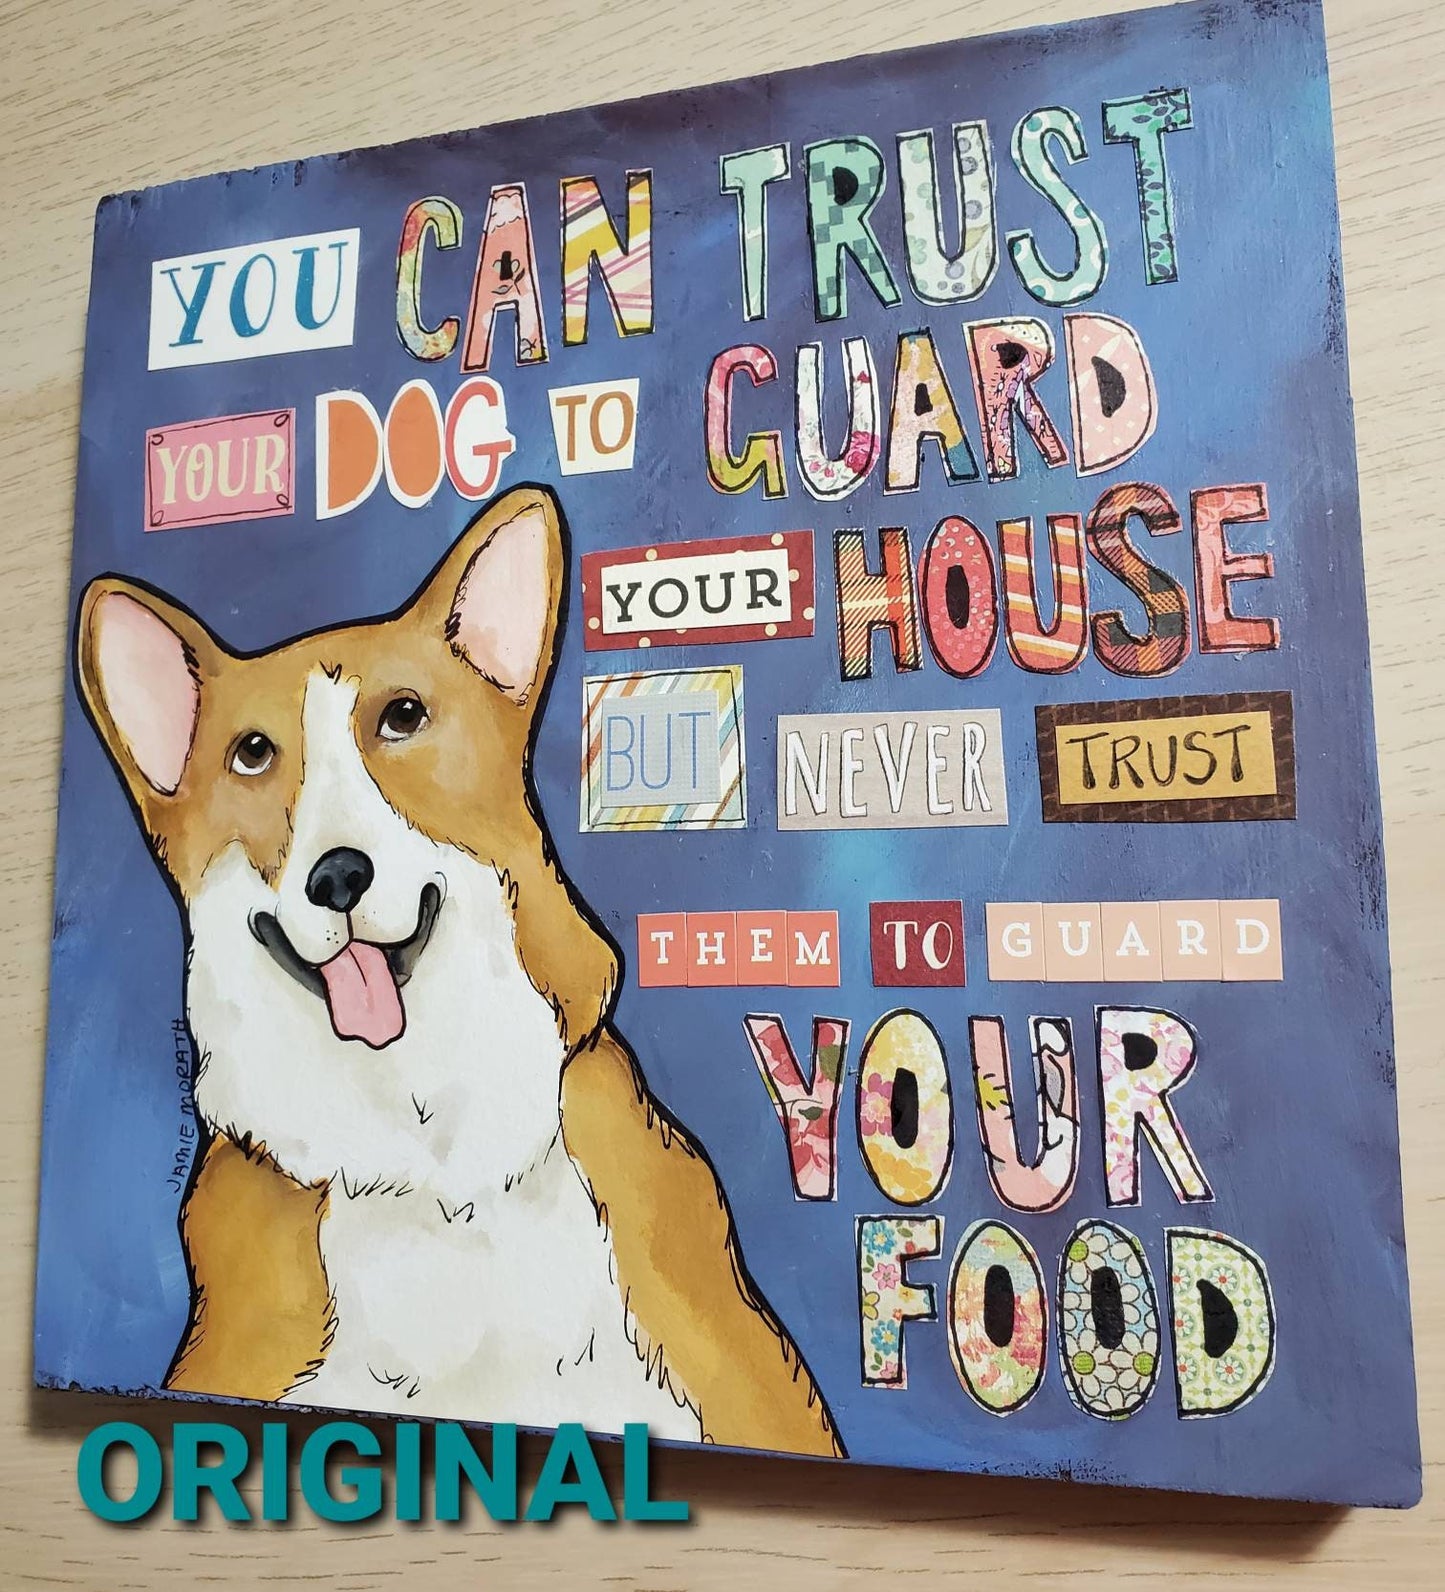 Trust Your Dog, art print